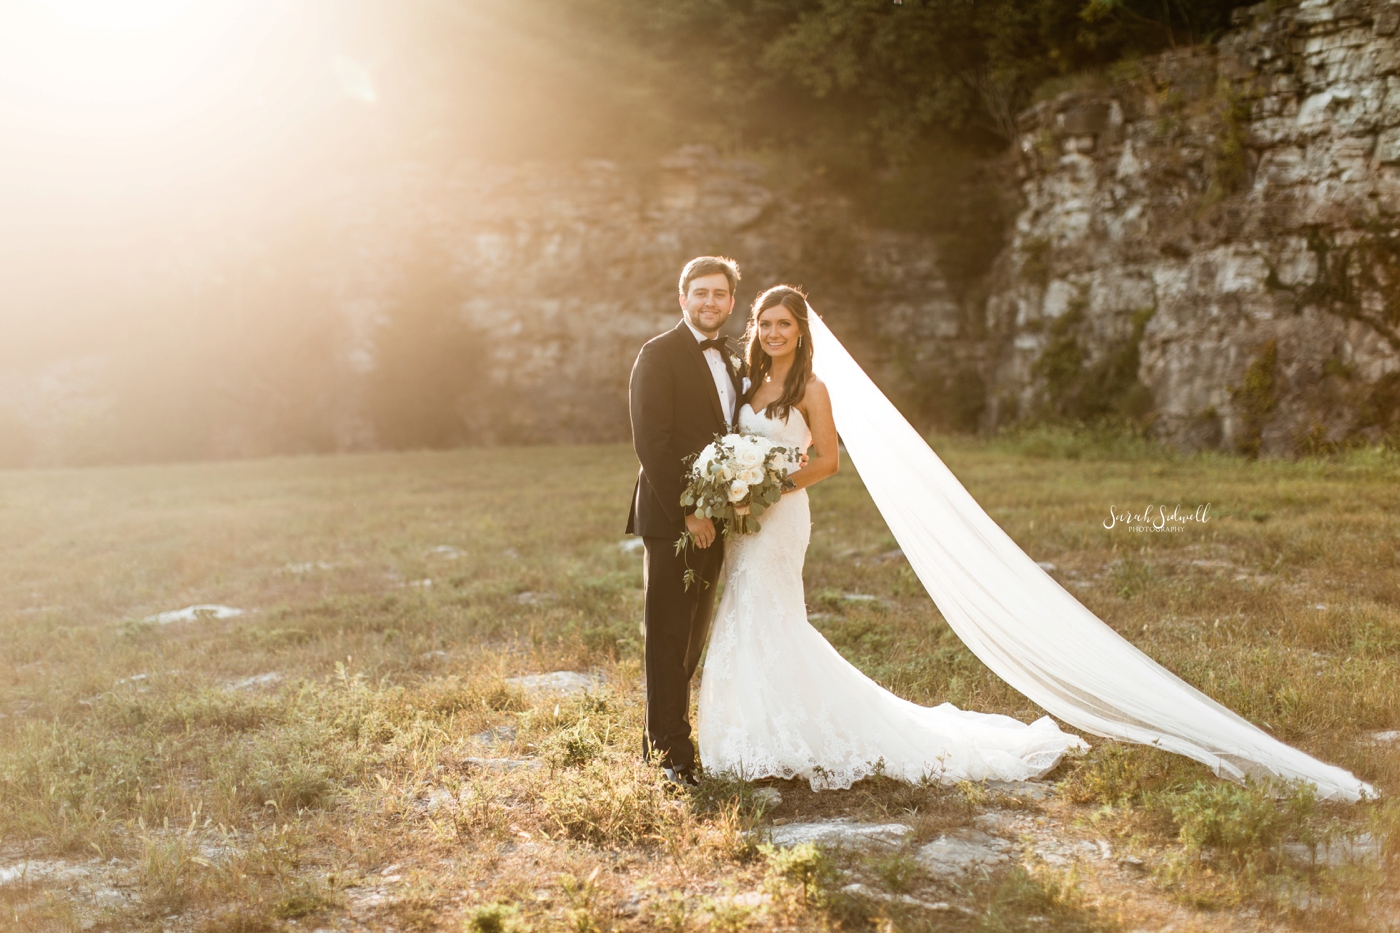 Nashville Wedding Photography | Sarah Sidwell Photography